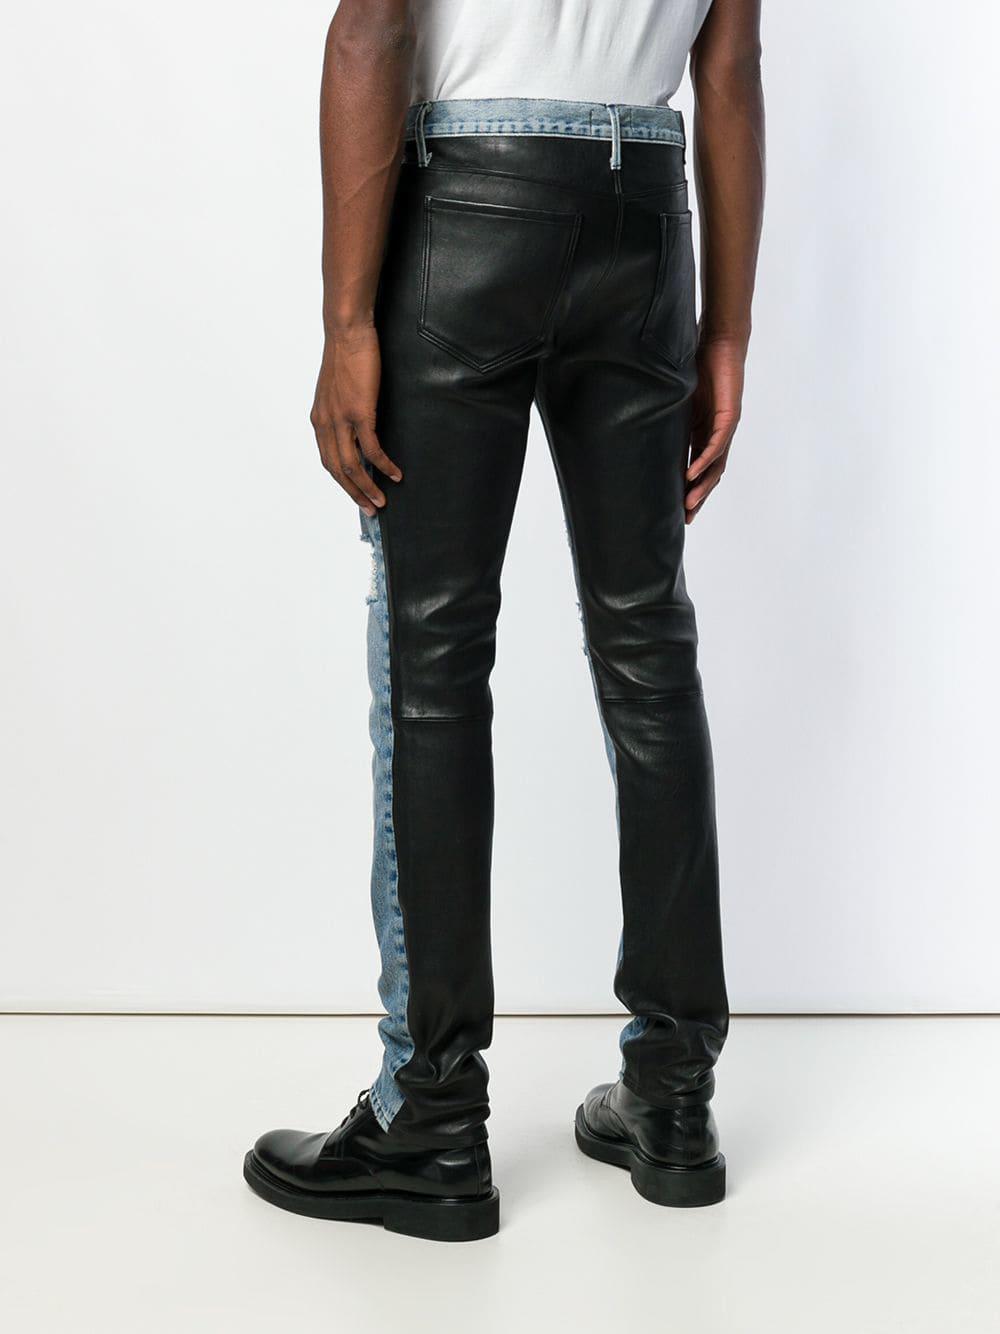 RTA Denim Contrast Material Jeans in Blue for Men - Lyst